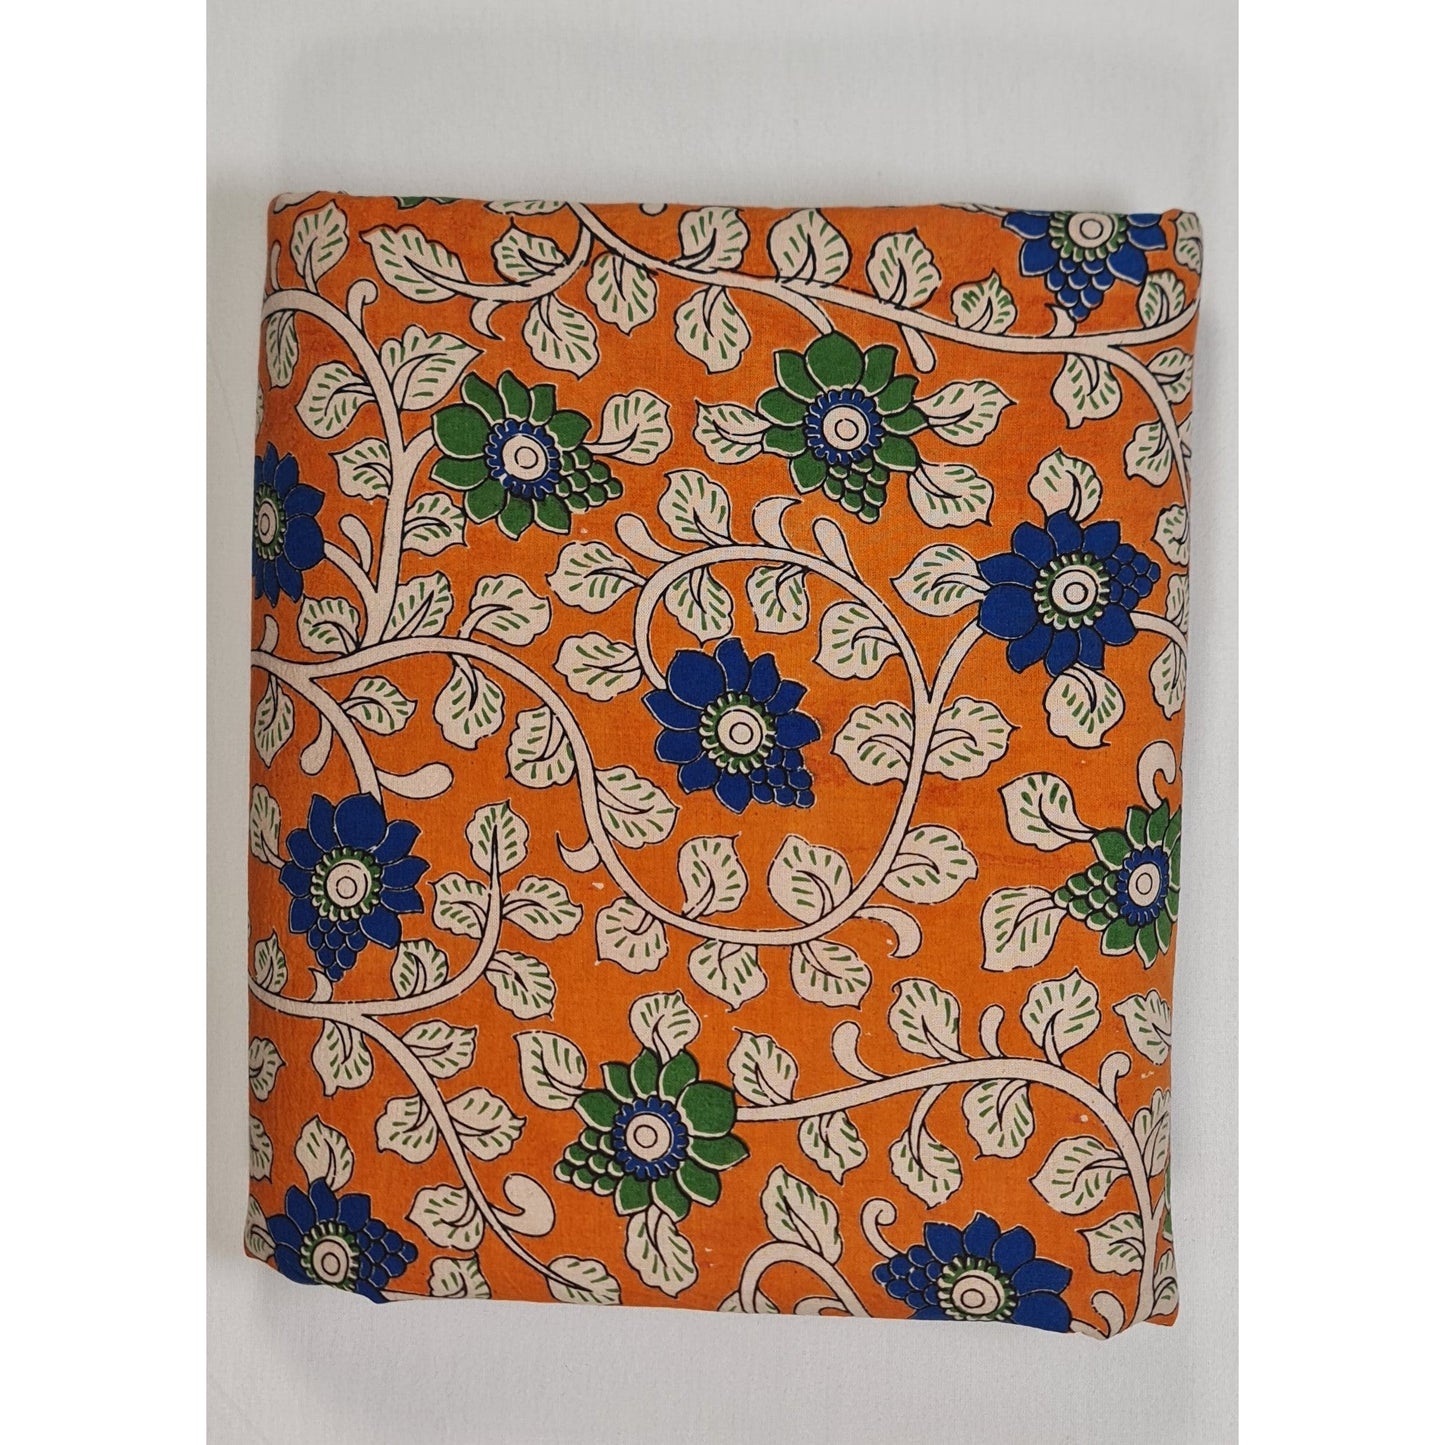 Hand block printed kalamkari cotton fabric - Vinshika